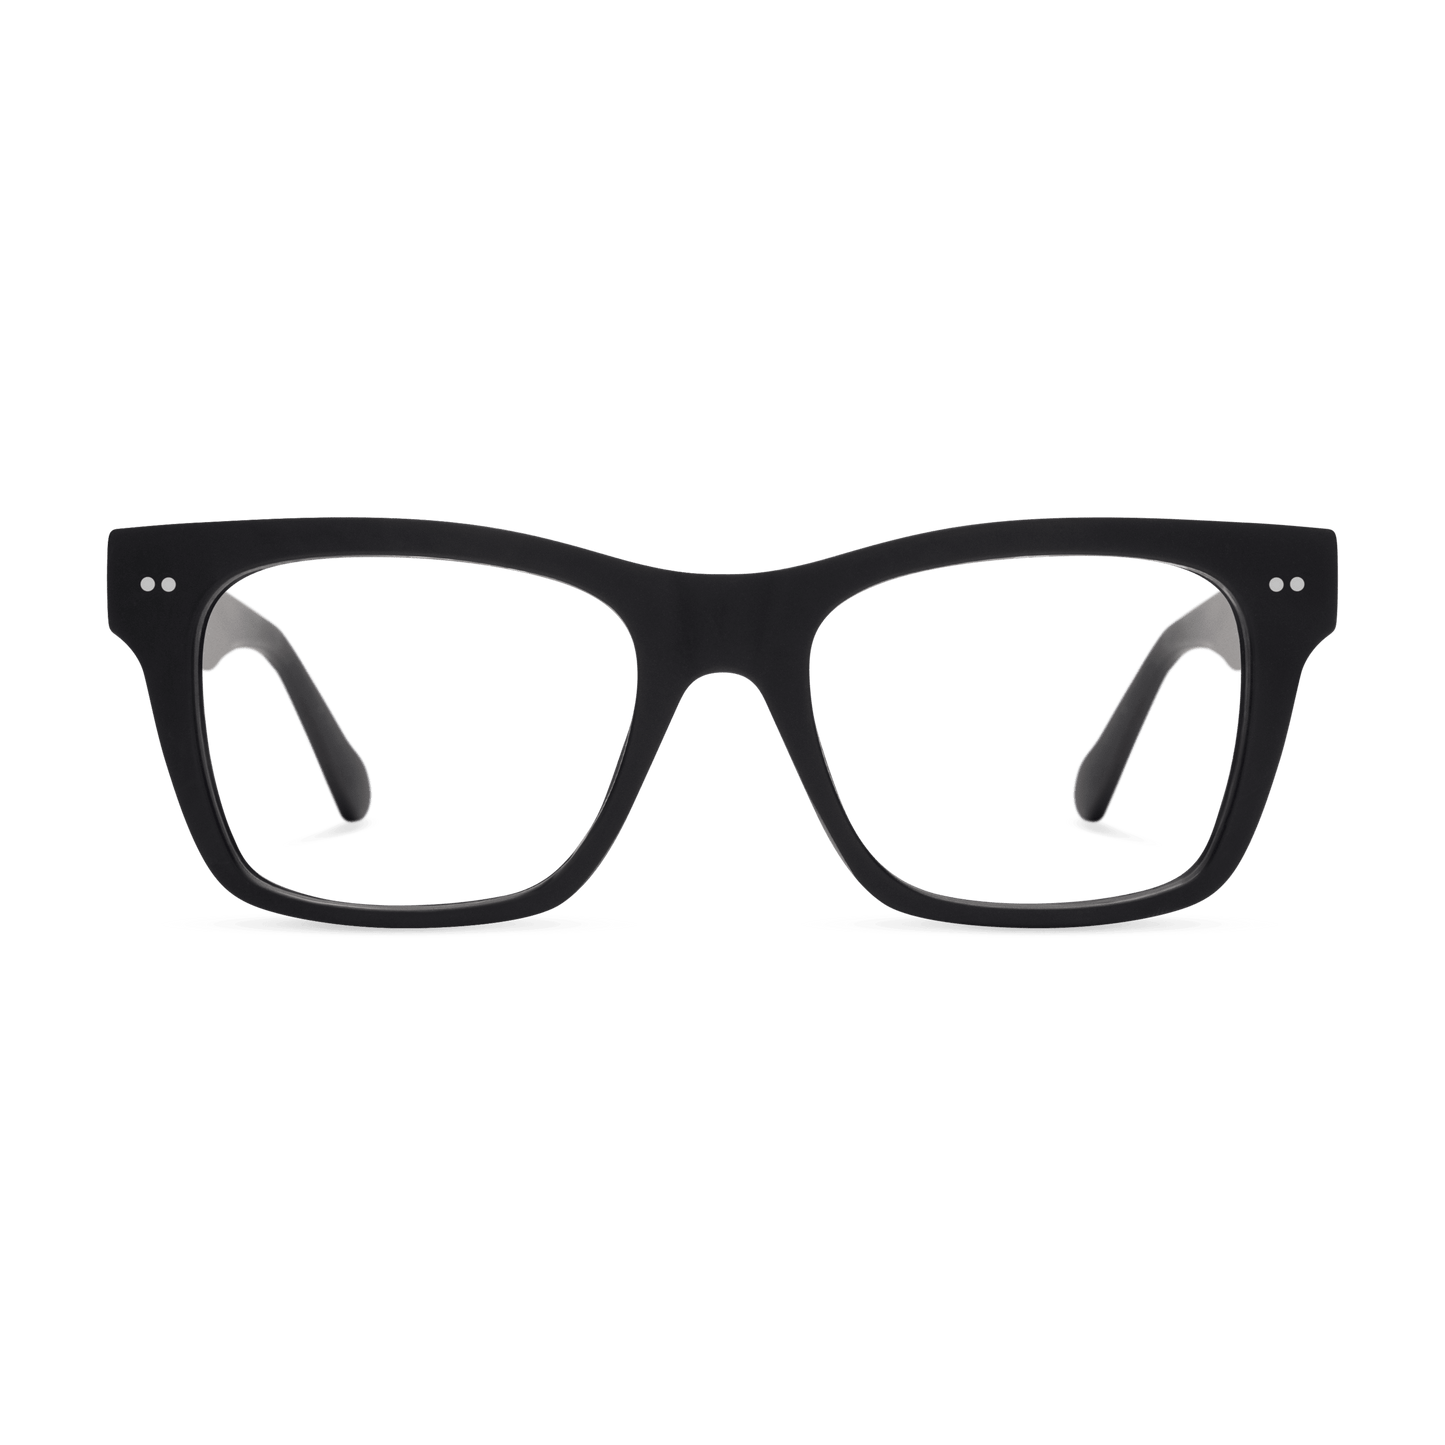 Cosmo Blue Light Eyewear Frames LOOK OPTIC (Black) +0.00 